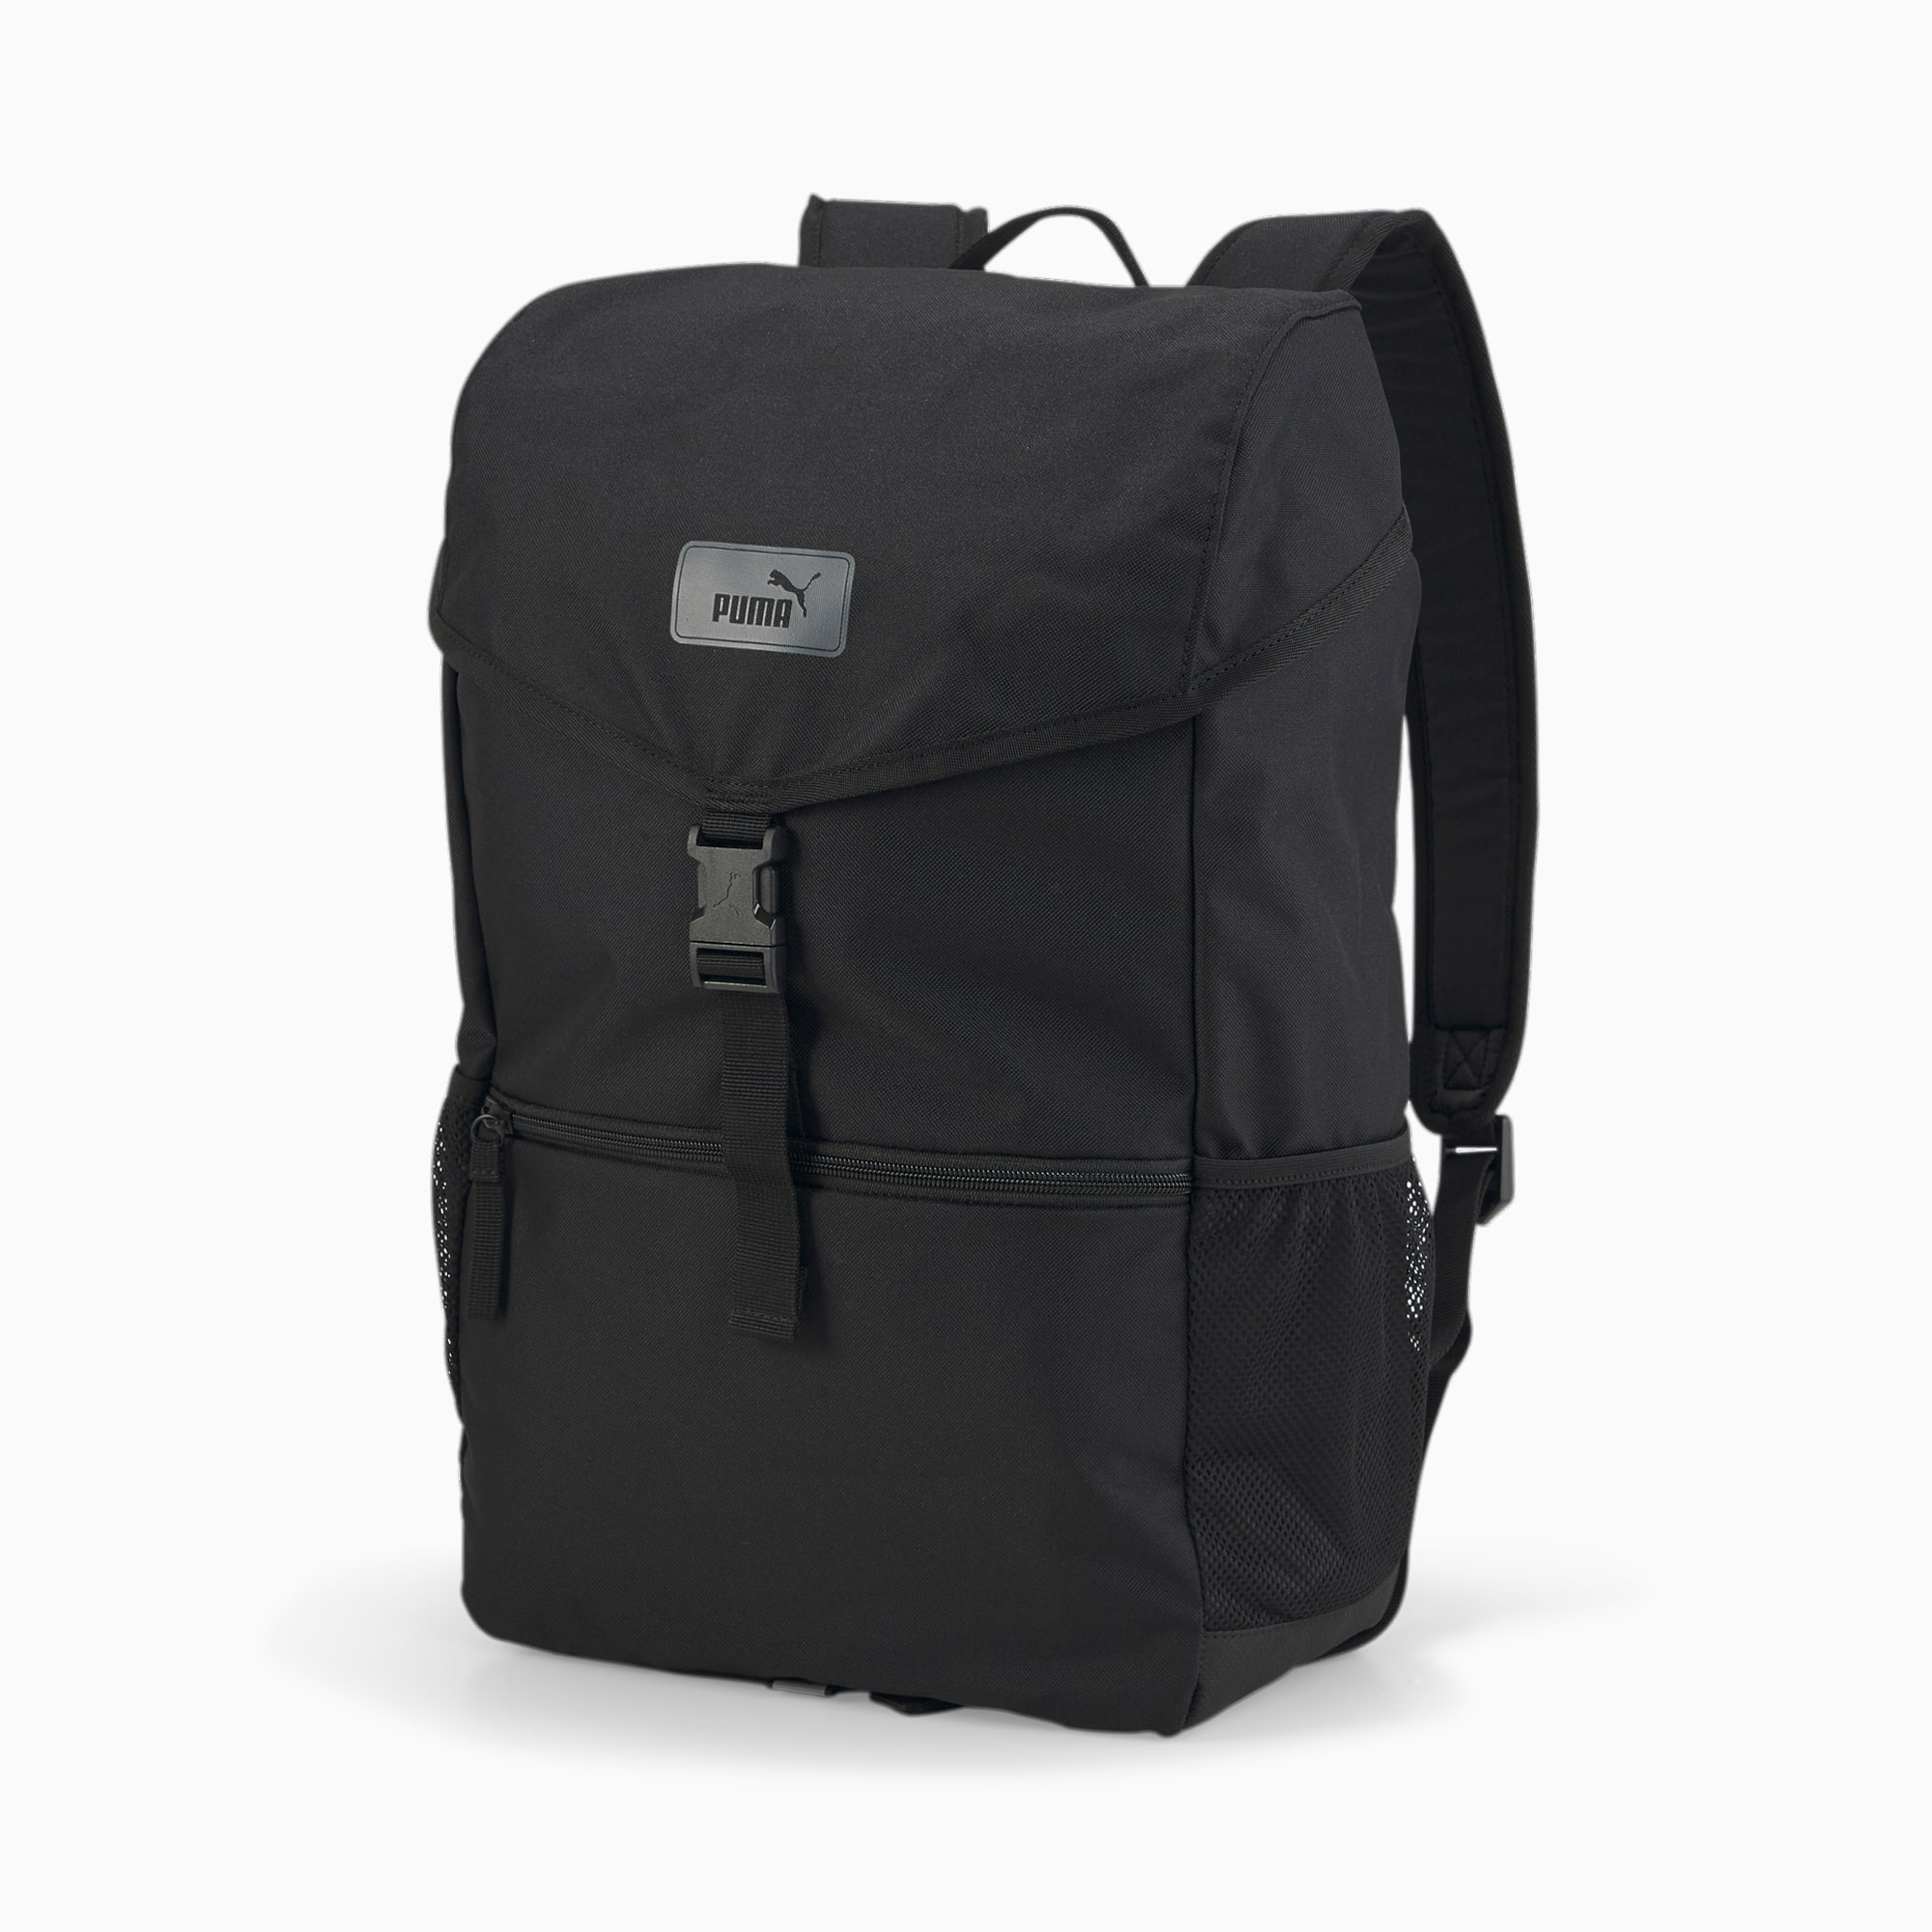 PUMA Style Backpack | PUMA Black | PUMA Shop All Puma | PUMA